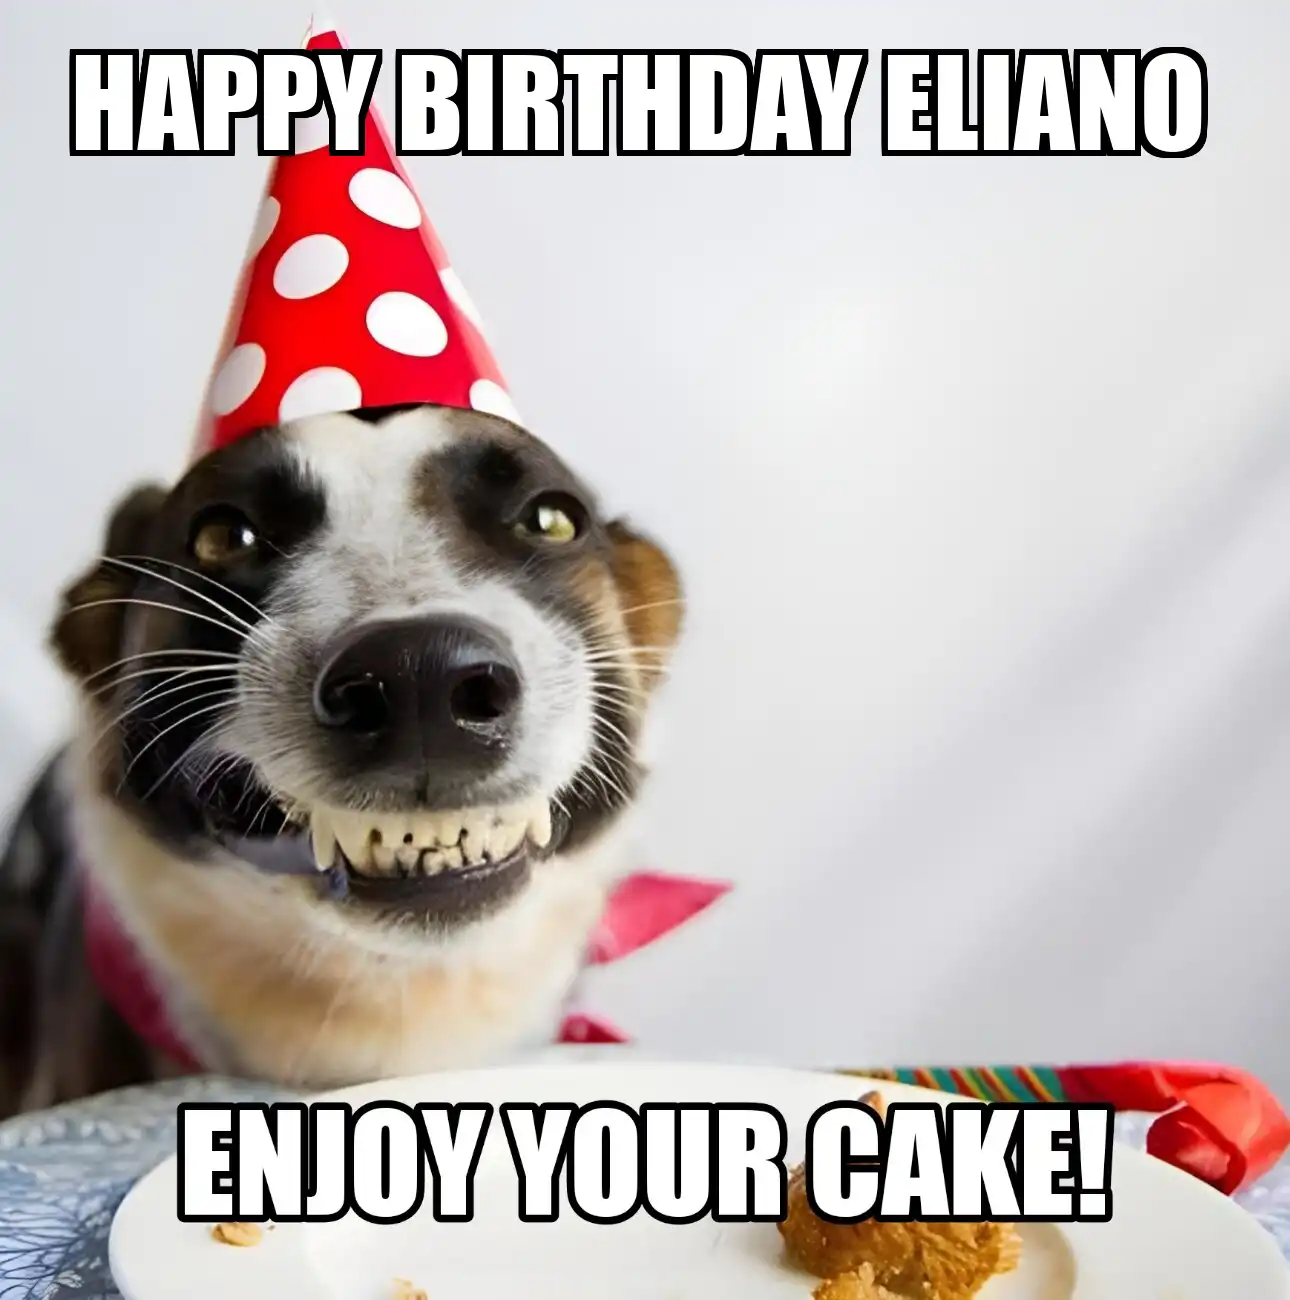 Happy Birthday Eliano Enjoy Your Cake Dog Meme